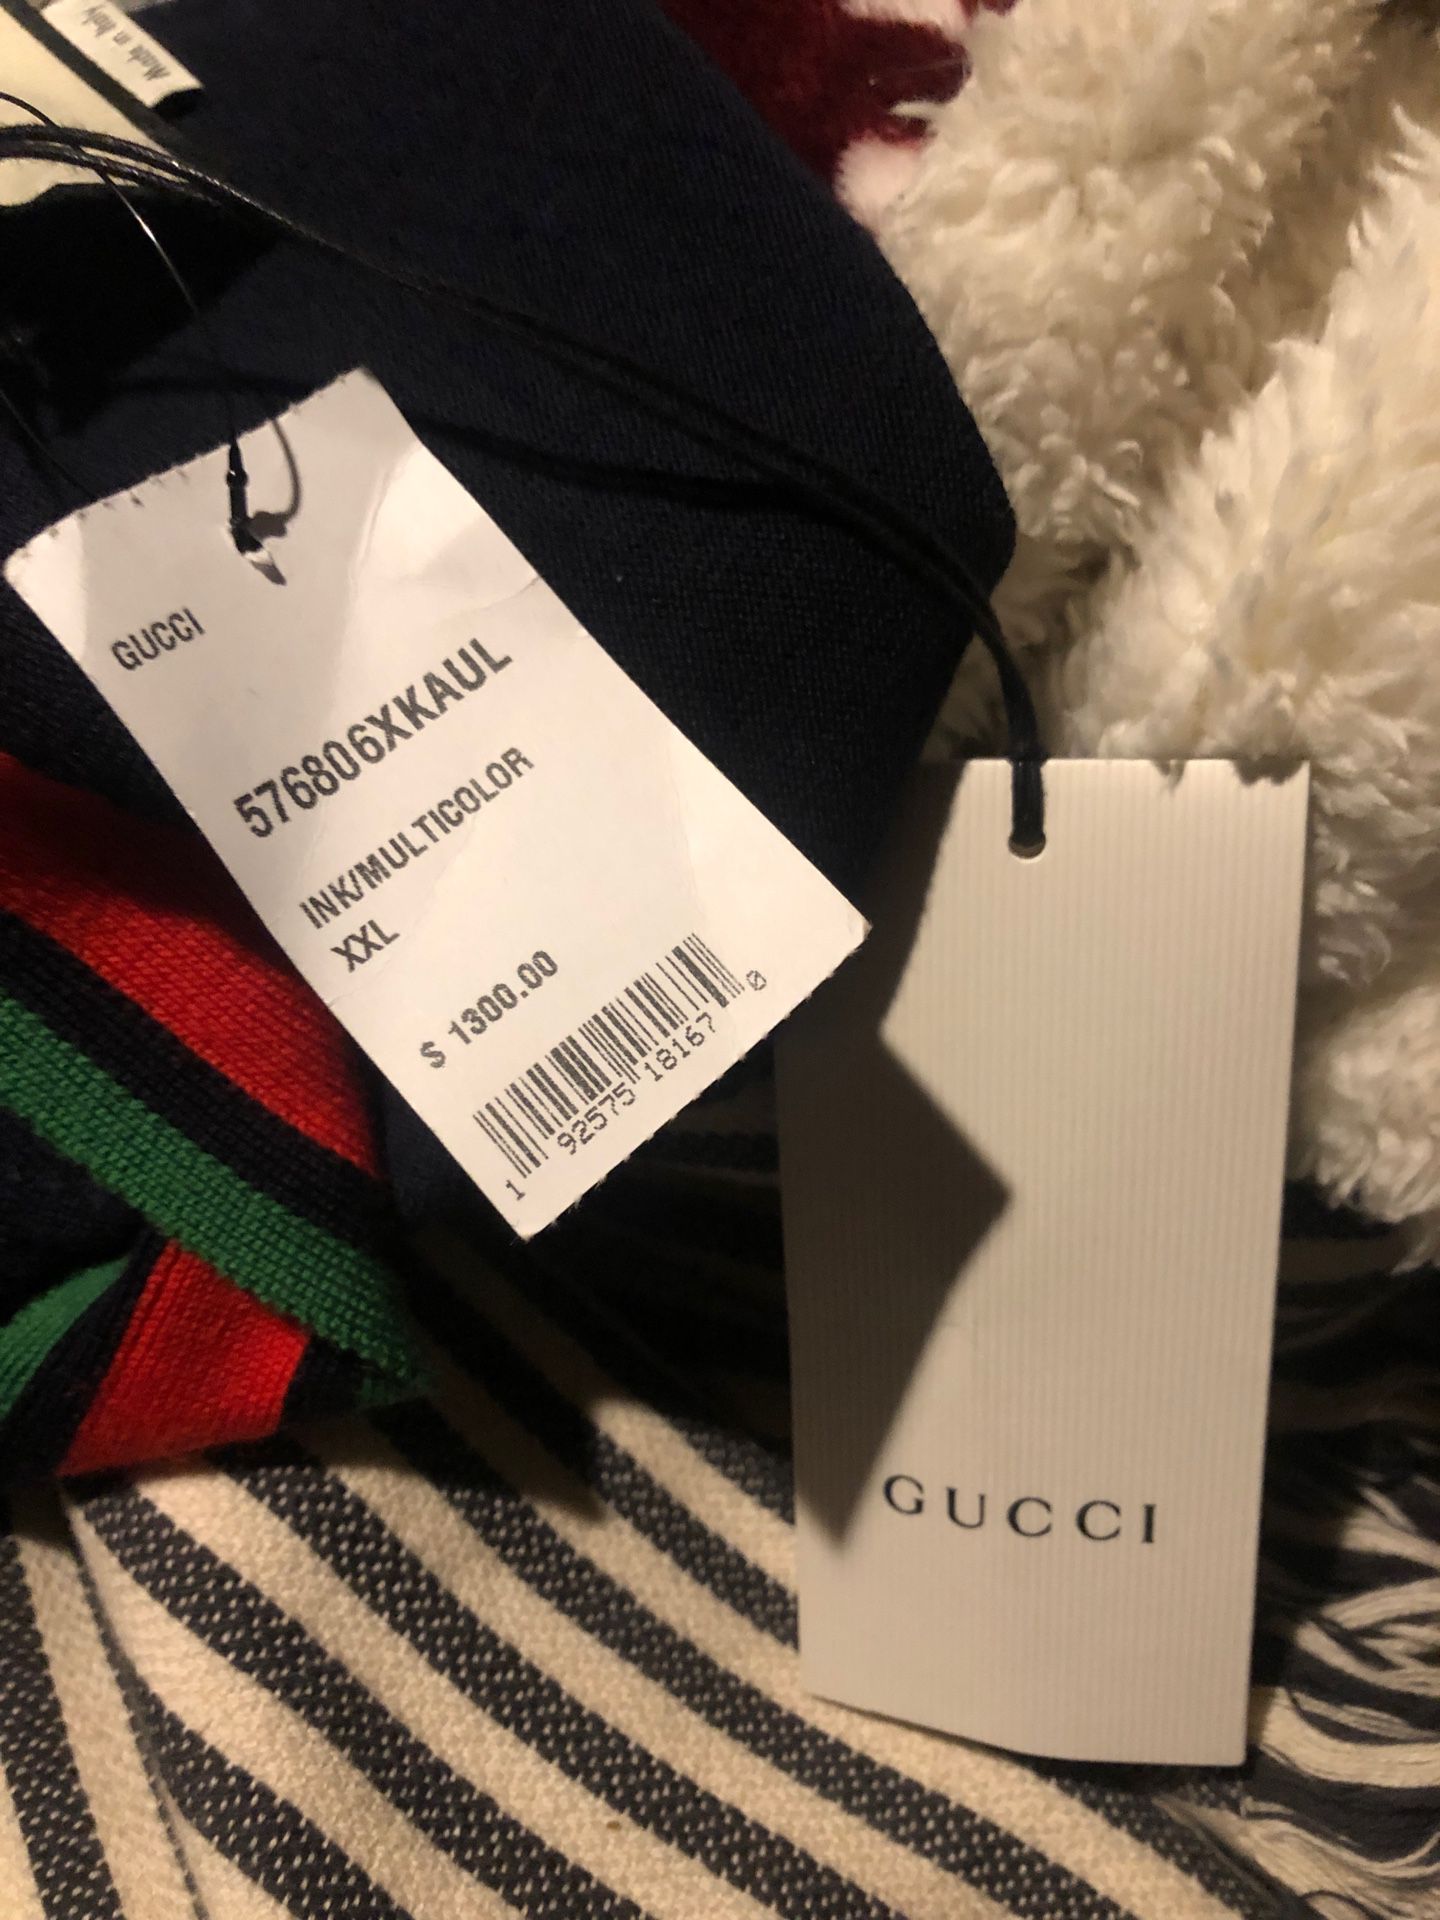 Gucci cardigan